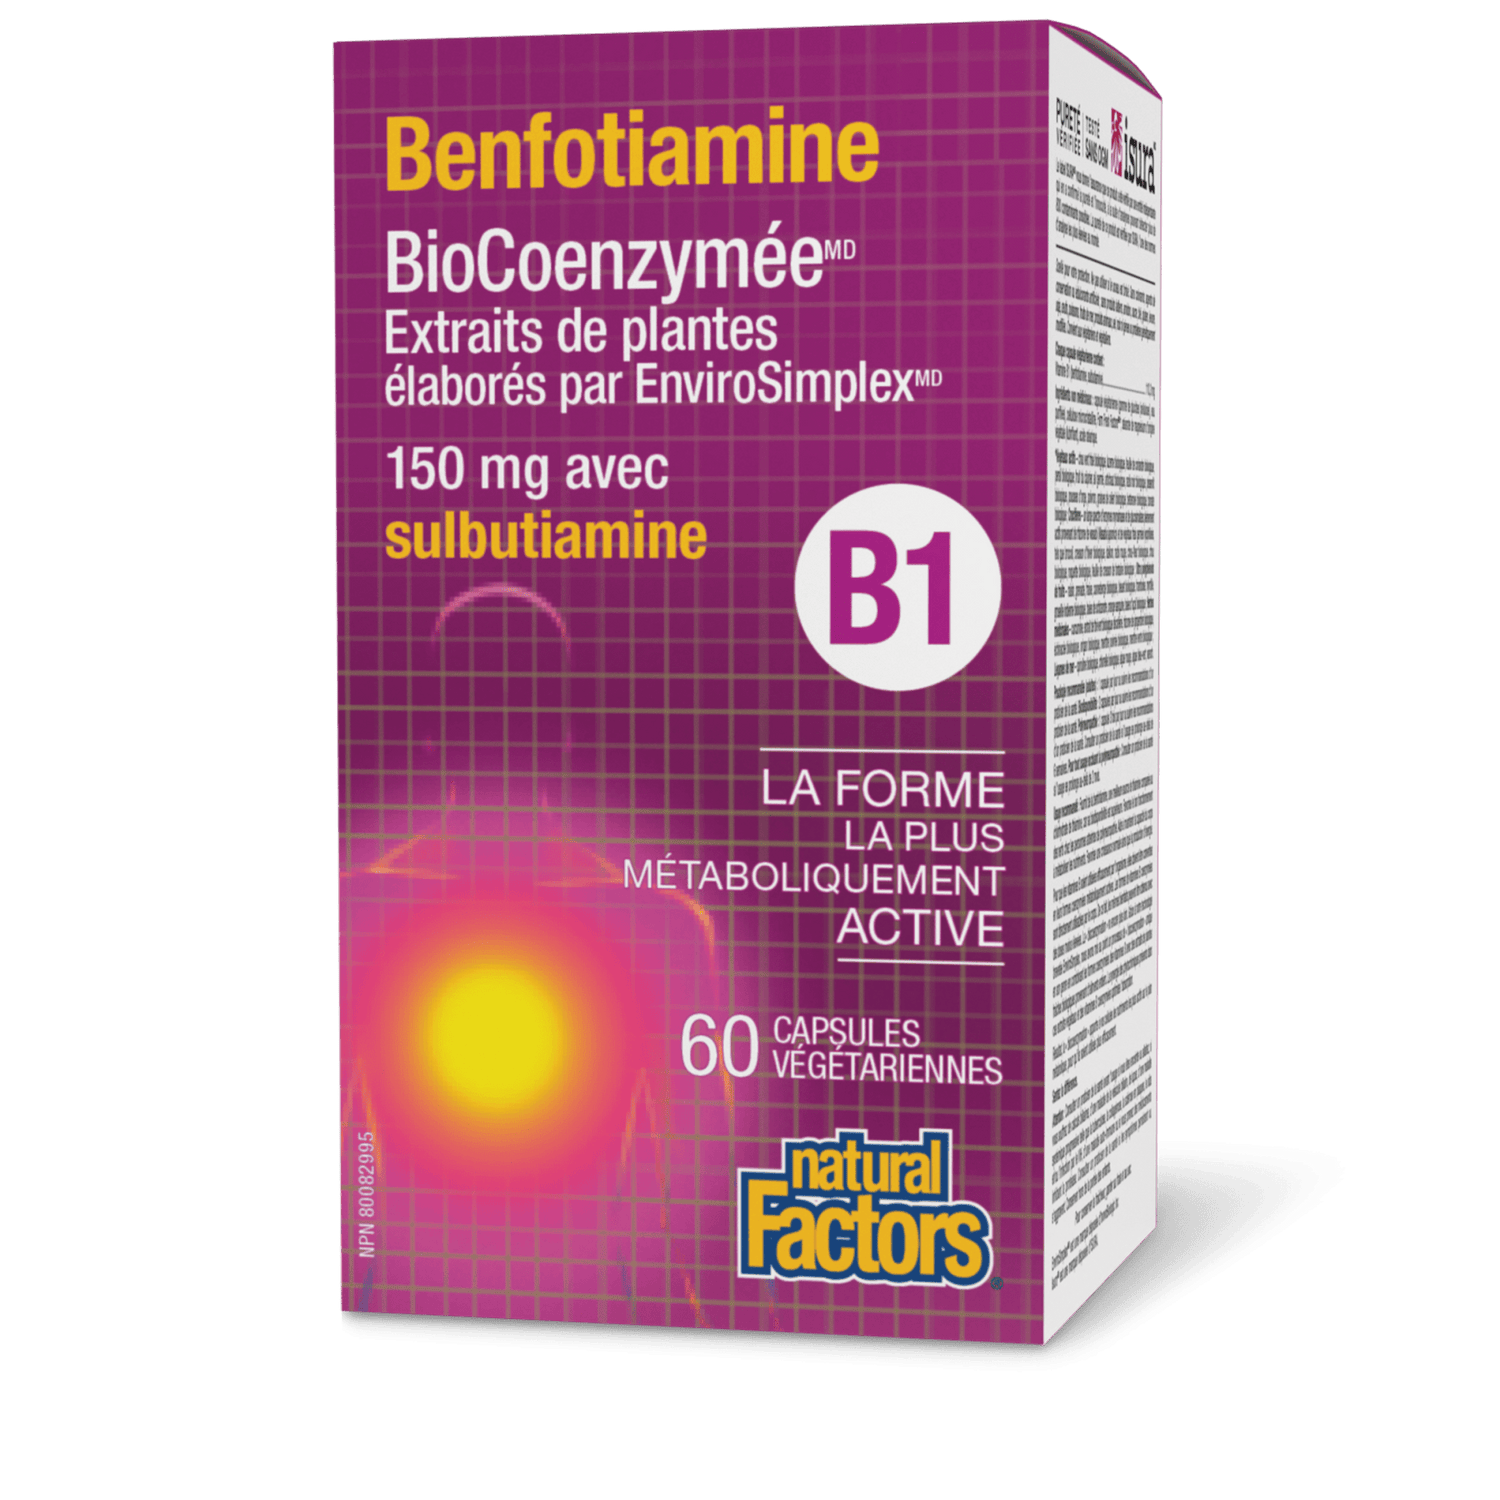 Benfotiamine BioCoenzymée • B1 avec sulbutiamine, Natural Factors|v|image|1258